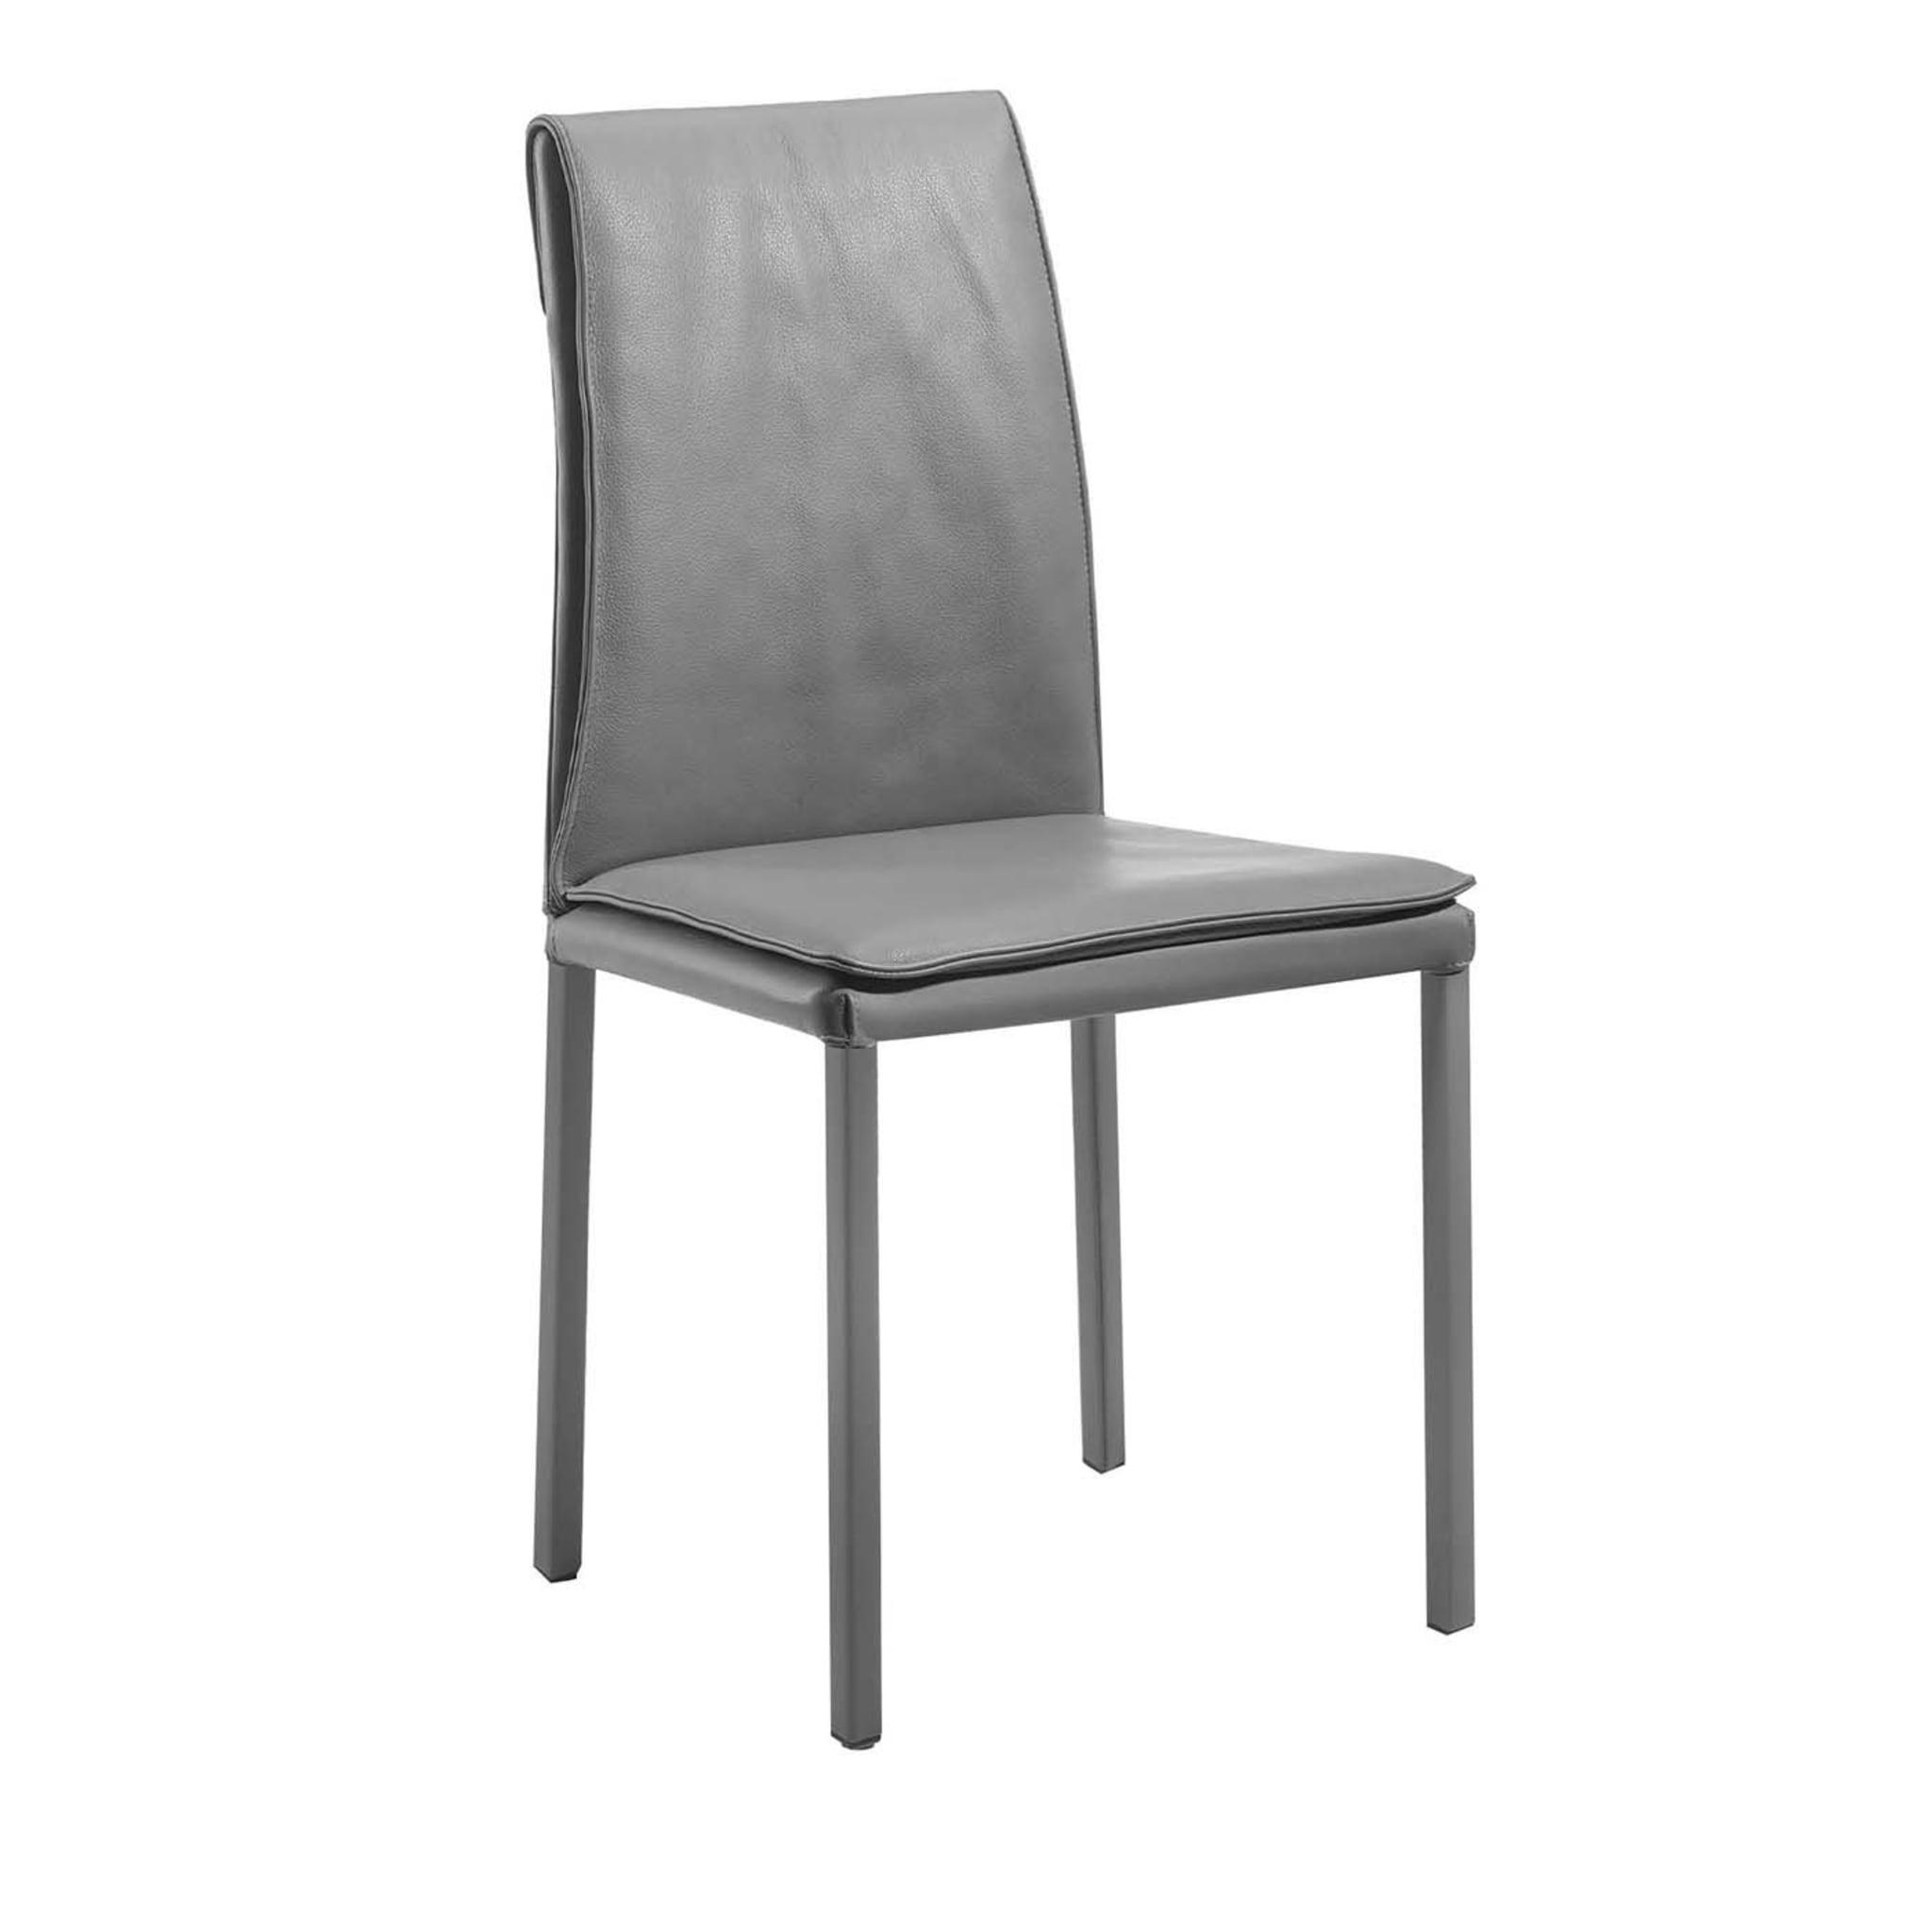 Borso Alta Light Gray Chair - Main view